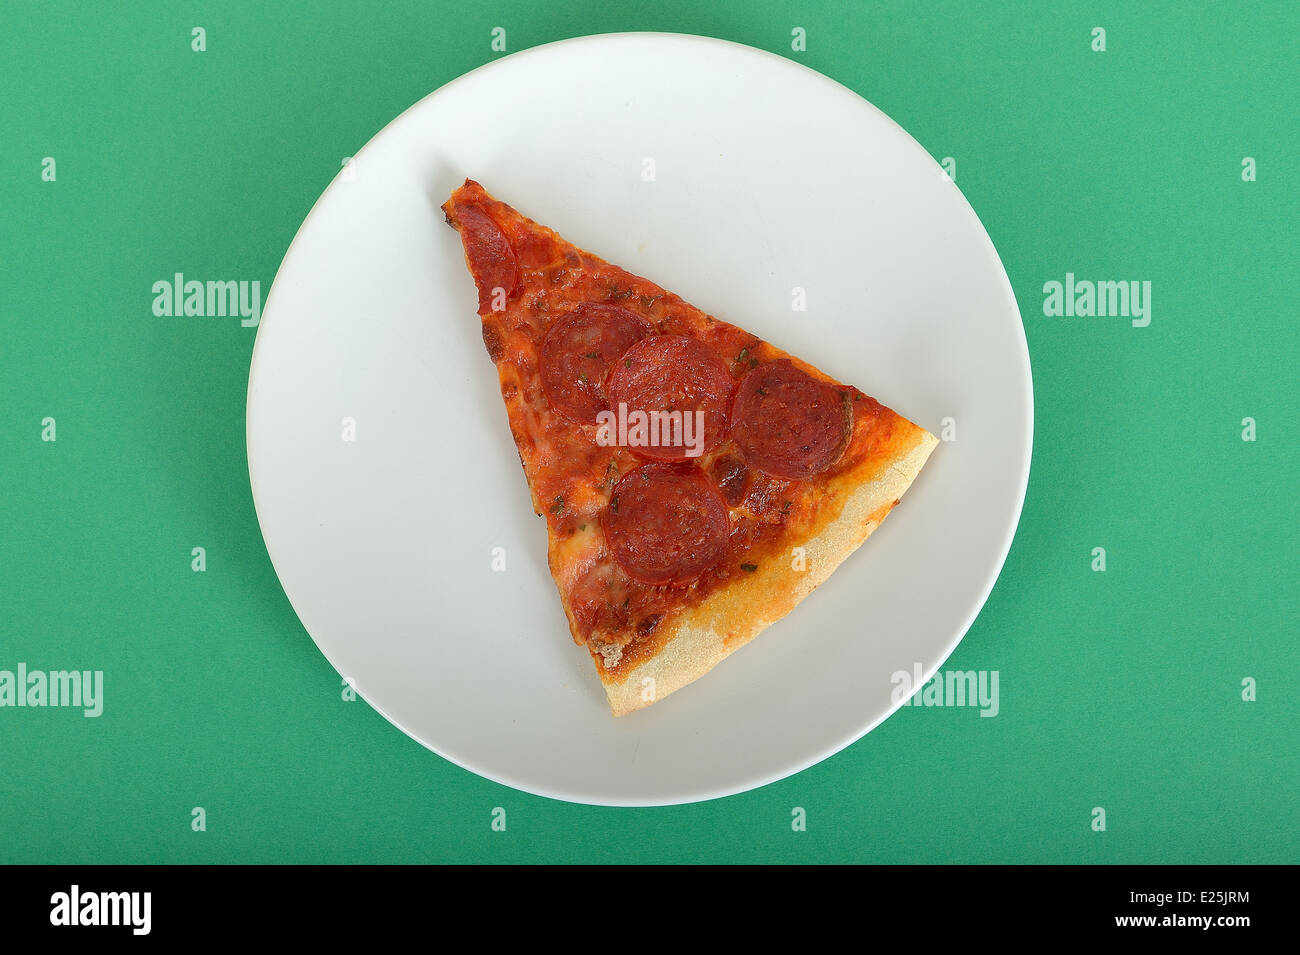 Slice of Pepperoni Pizza Providing 100 Calories Stock Photo